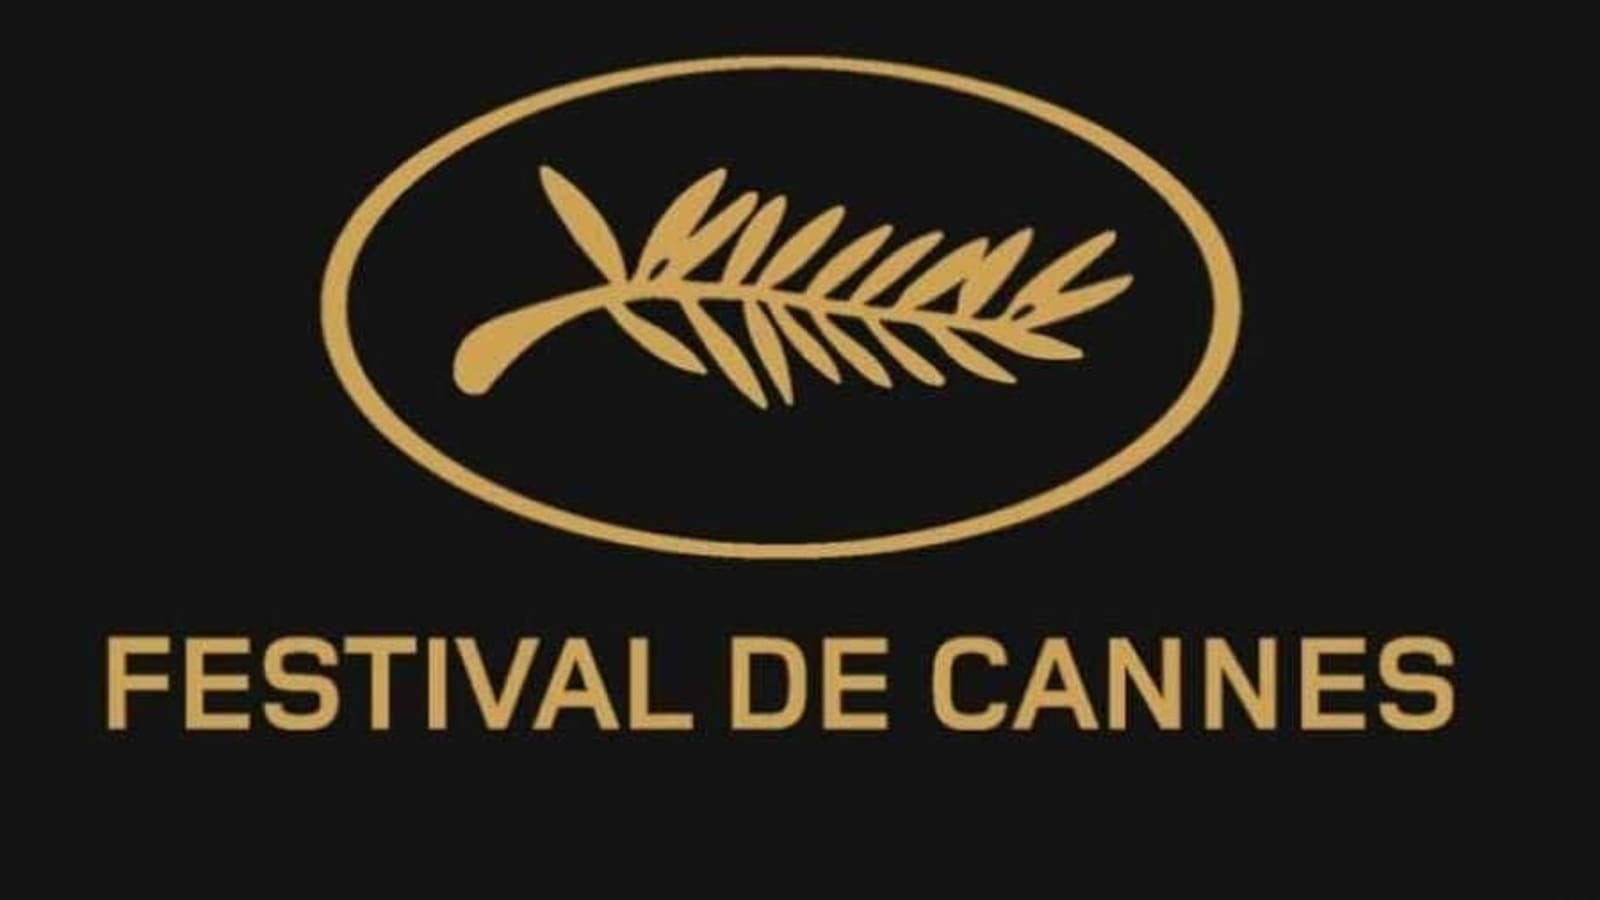 Cannes Film Festival 2021 postponed due to coronavirus pandemic